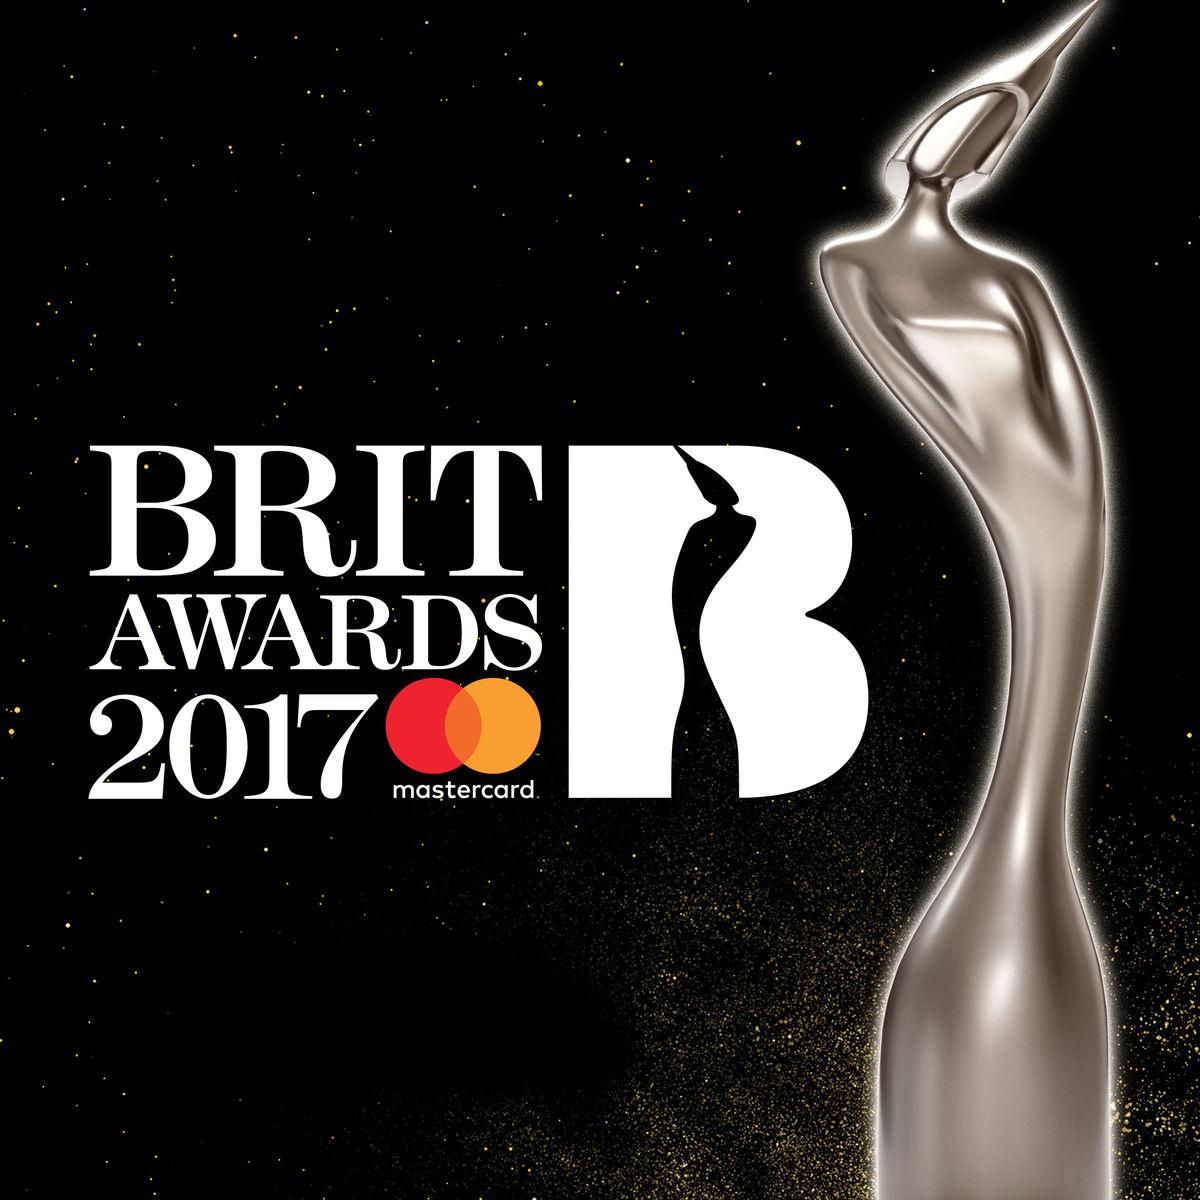 Don't Wanna Know歌词 歌手Maroon 5-专辑BRIT Awards 2017-单曲《Don't Wanna Know》LRC歌词下载